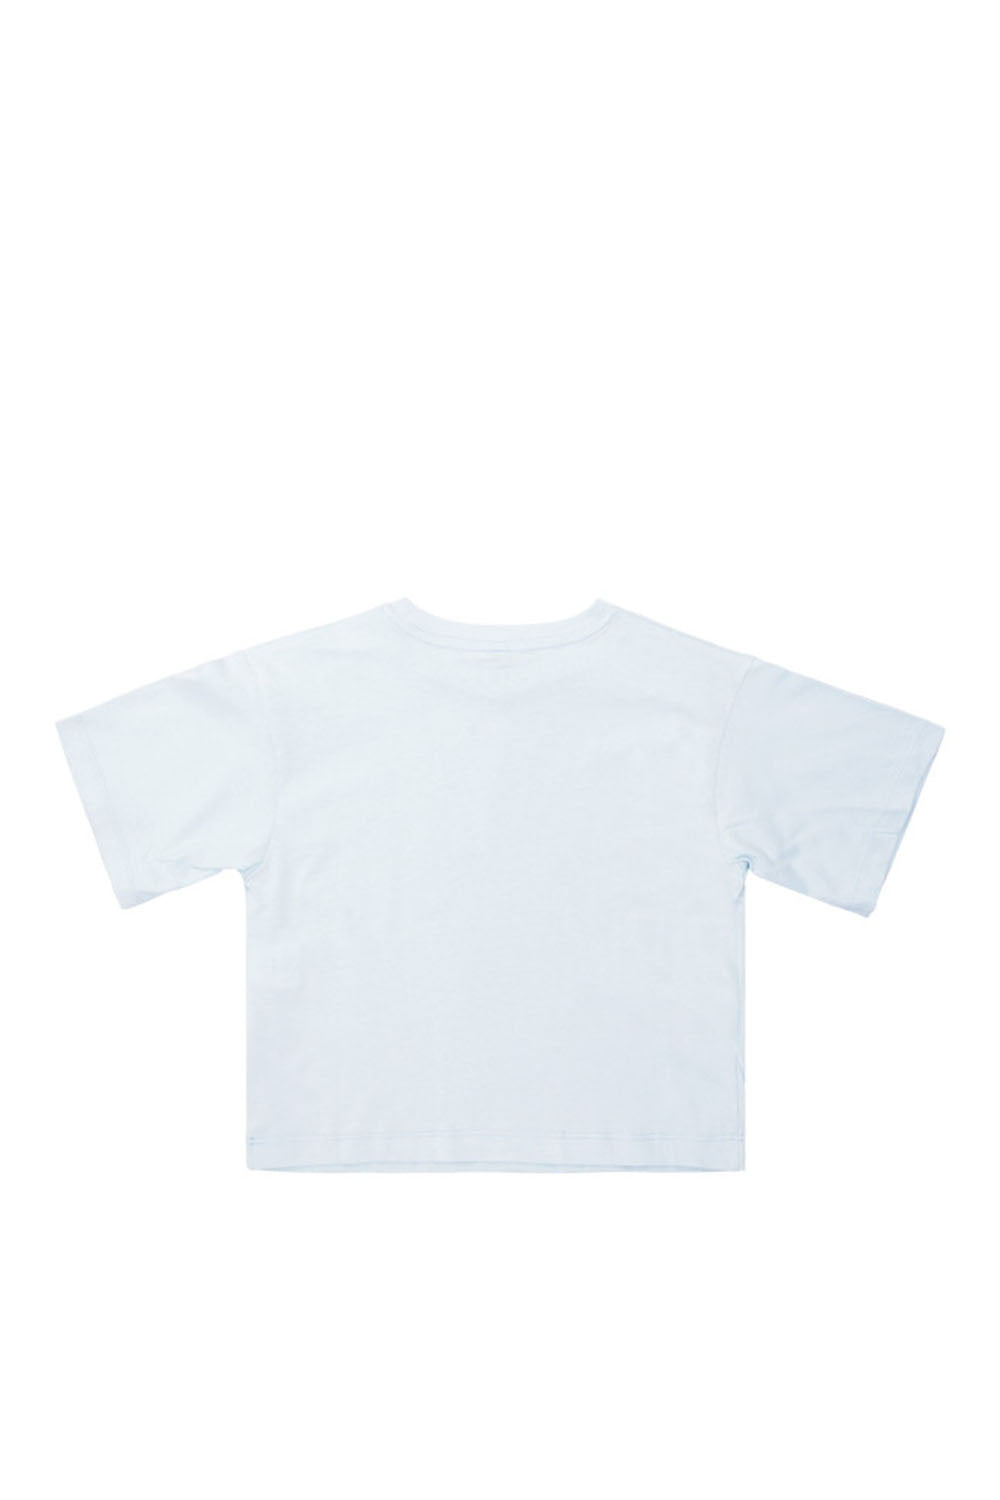 Cropped Logo T Shirt for Girls - Maison7